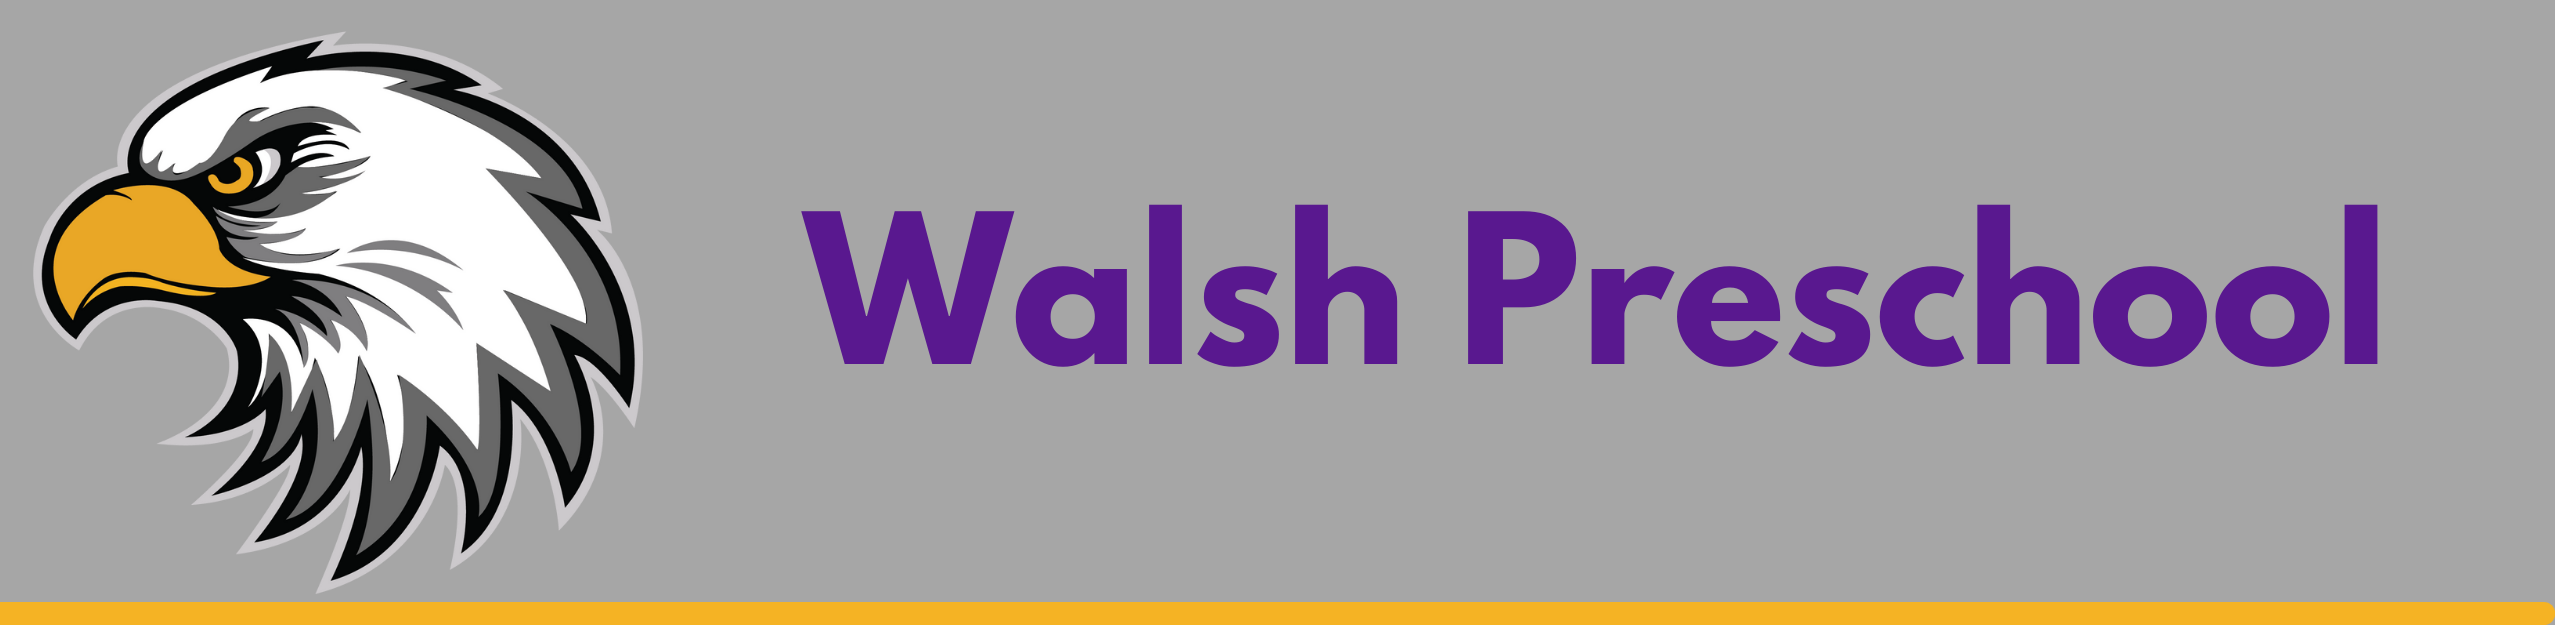 On gray background, purple text reading: Walsh Preschool